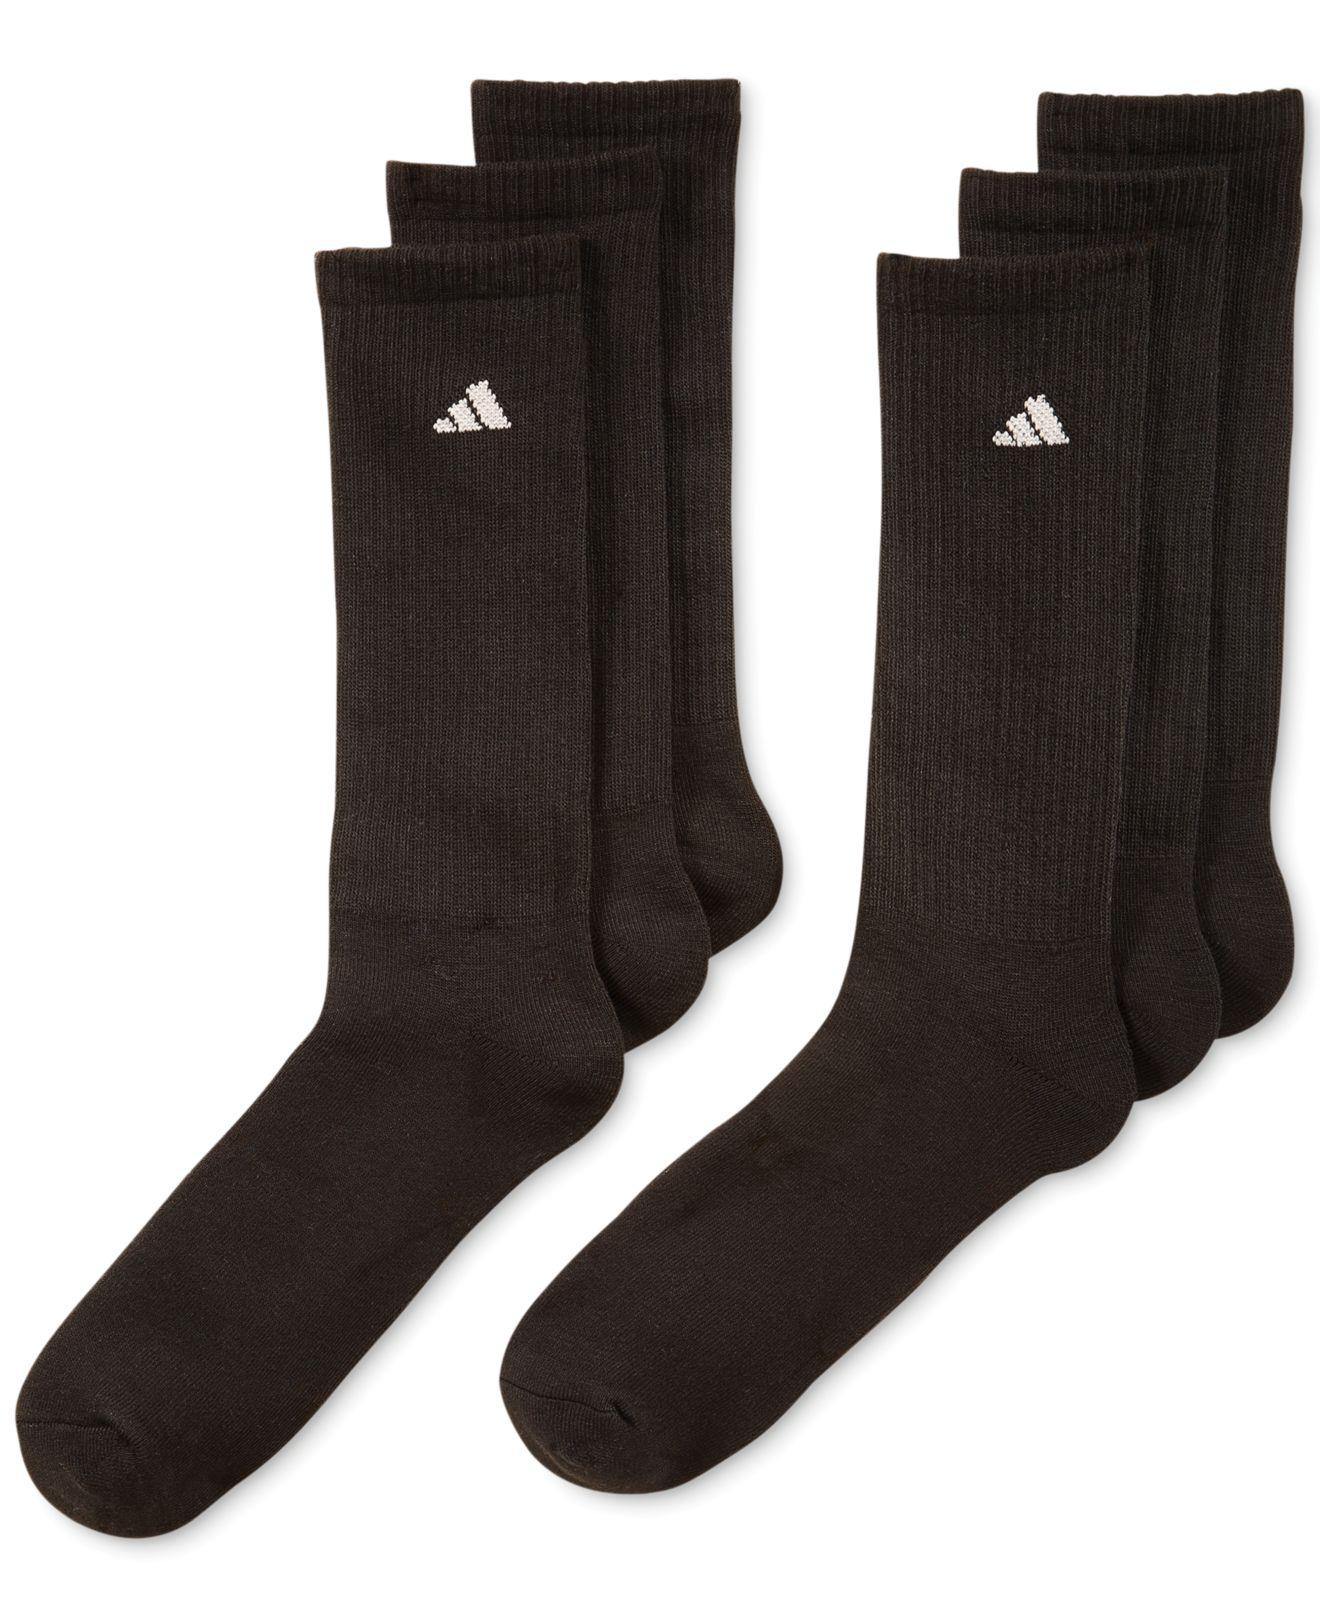 Lyst - Adidas Men's Athletic Performance Crew Socks 6-pack in Black for ...